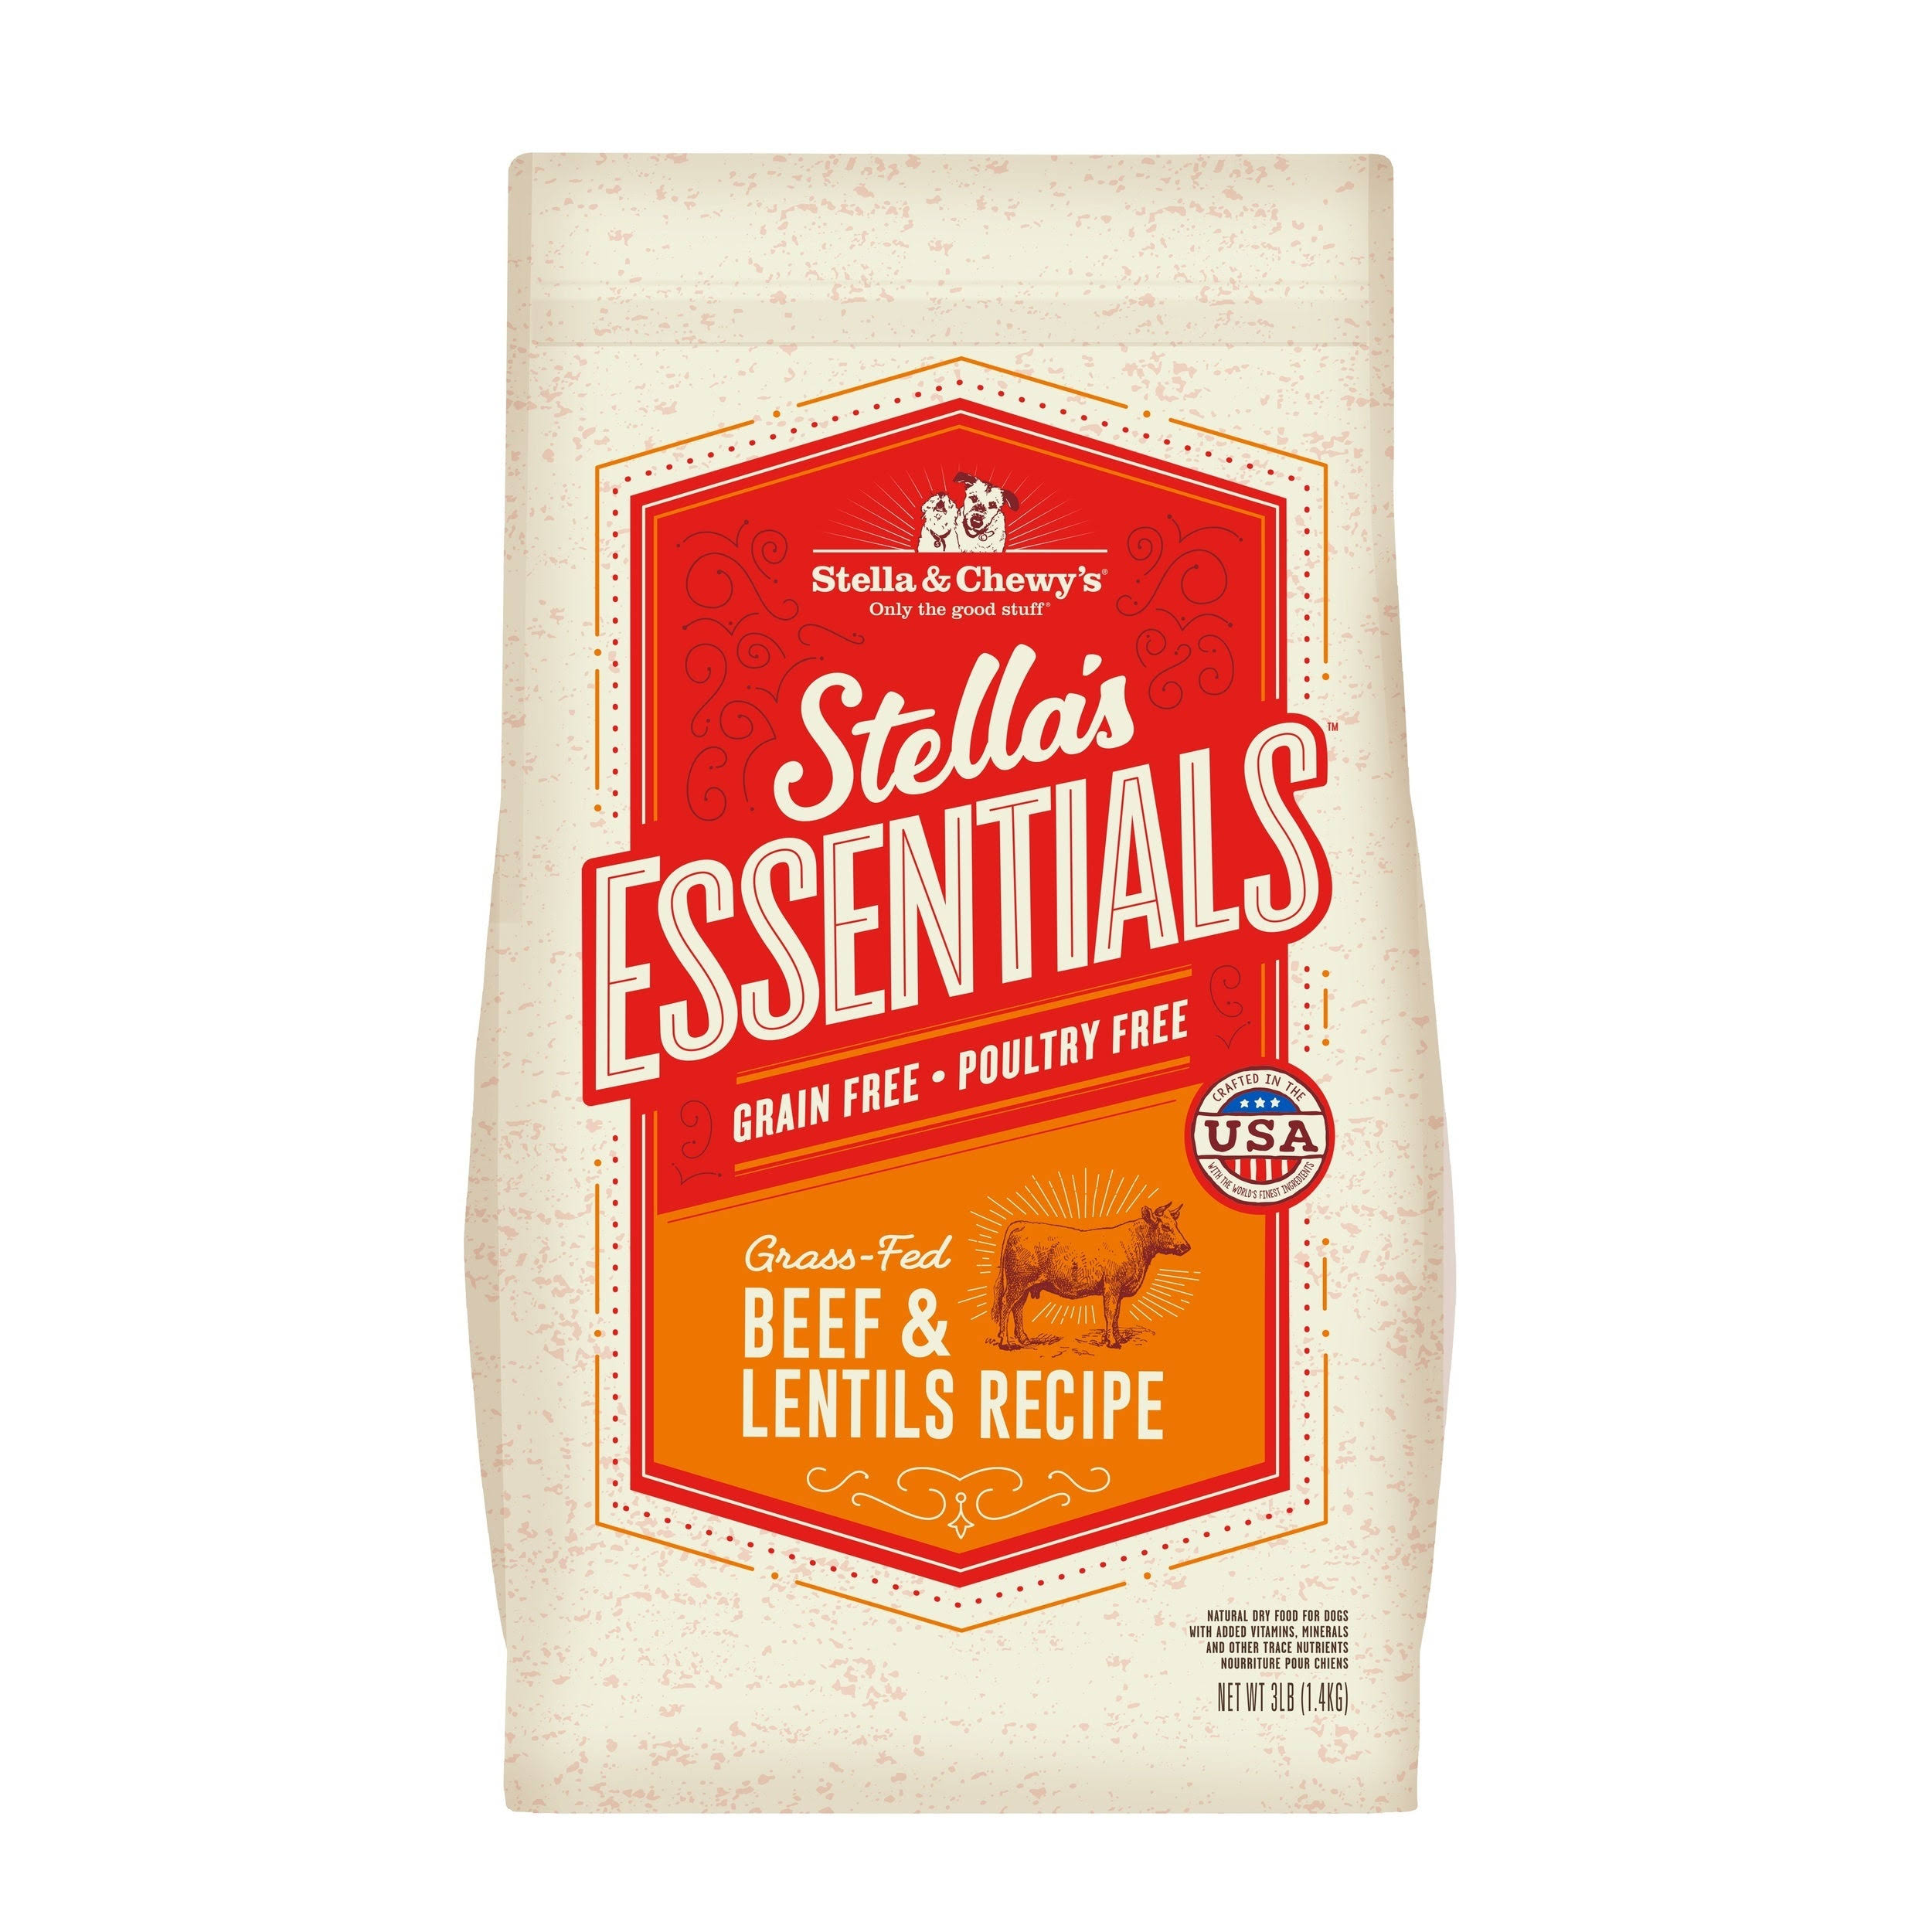 Stella & Chewy's Essentials Grain-Free Grass-Fed Beef & Lentils Recipe Dog Food - 25-Lbs.